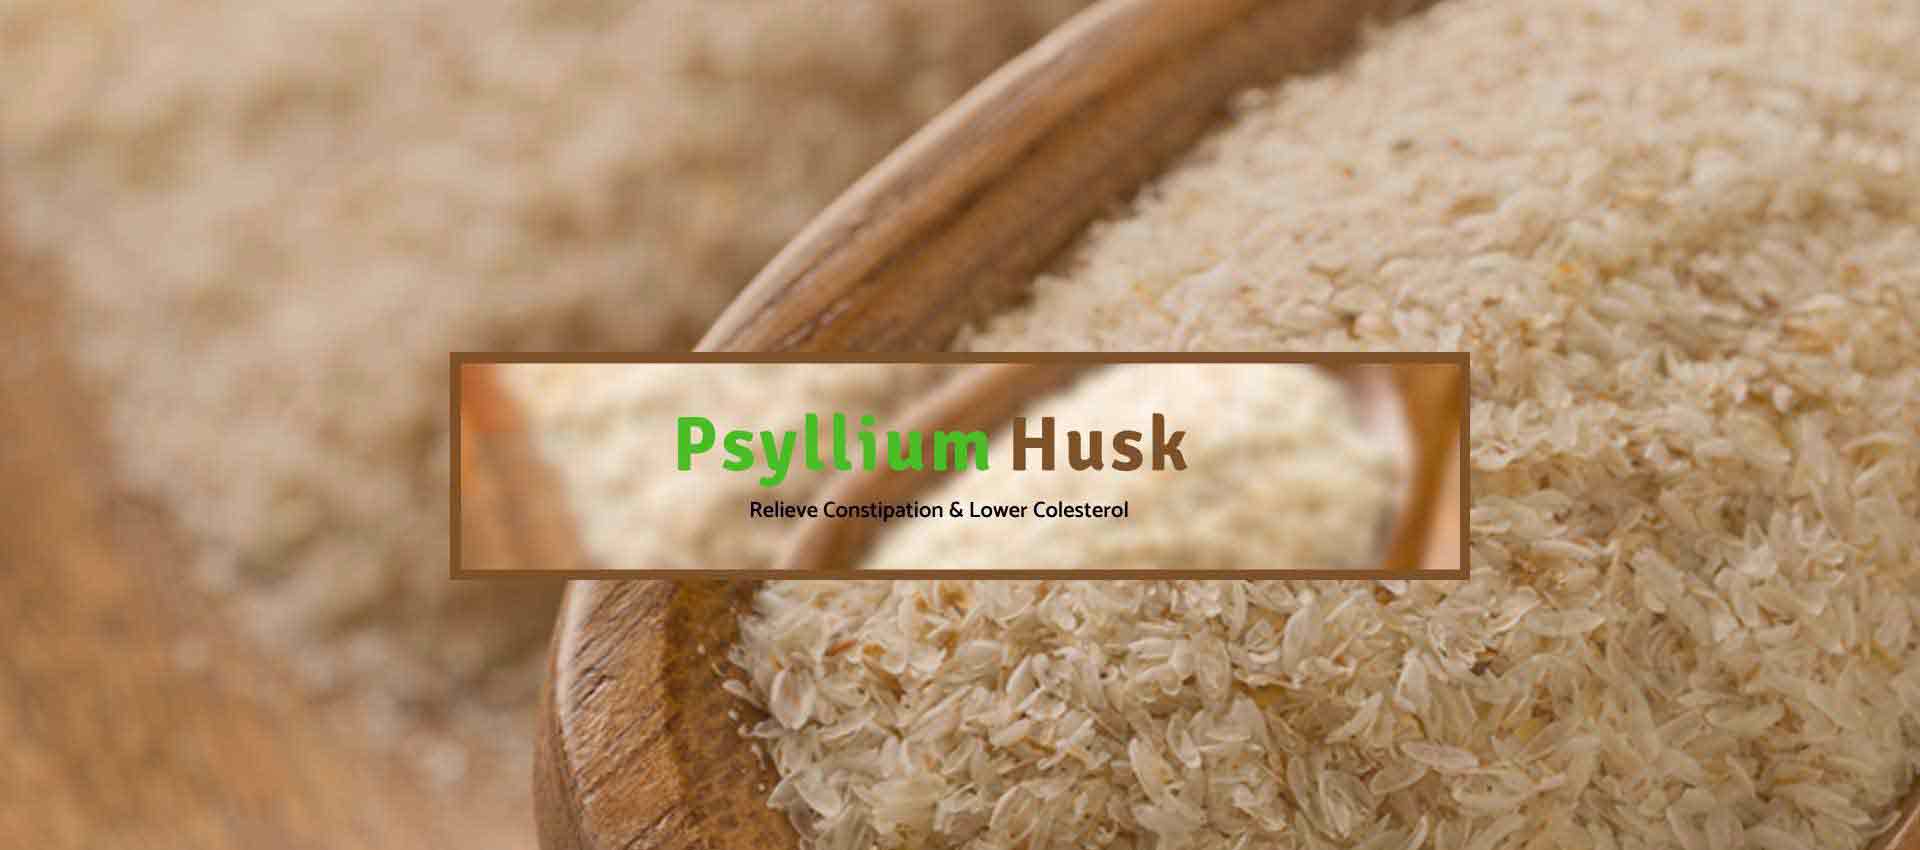 Psyllium Husk Manufacturers in Texas